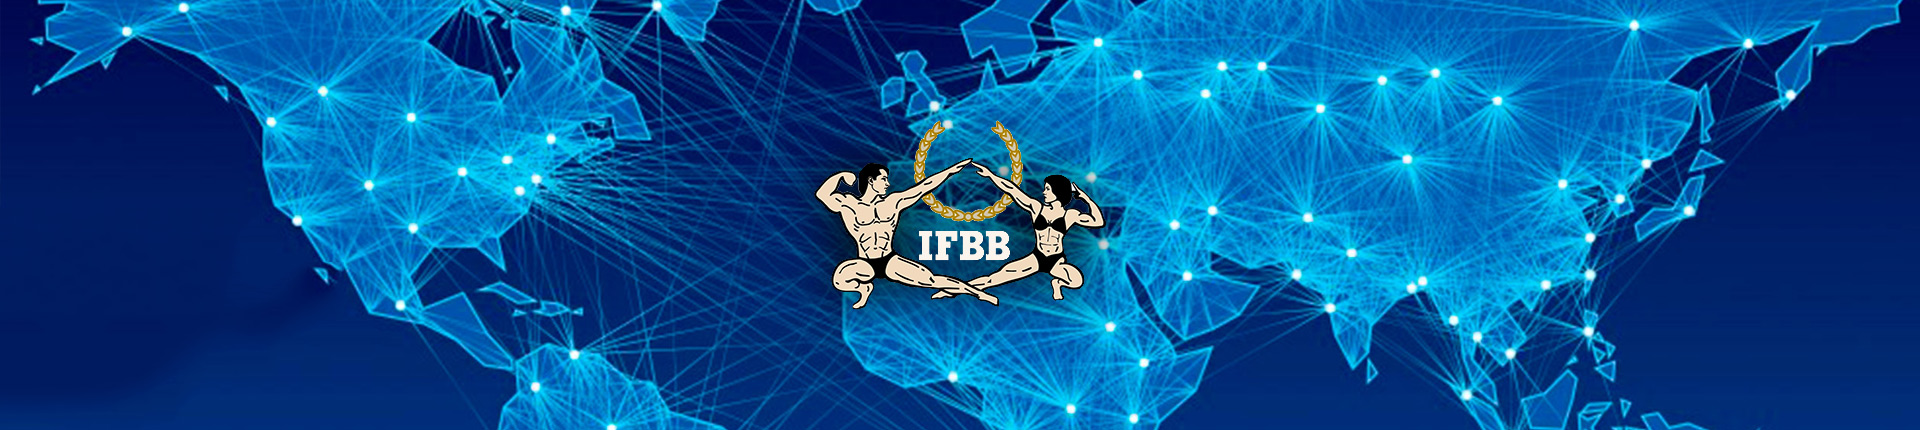 IFBB Grand Prix Anglii 2019 